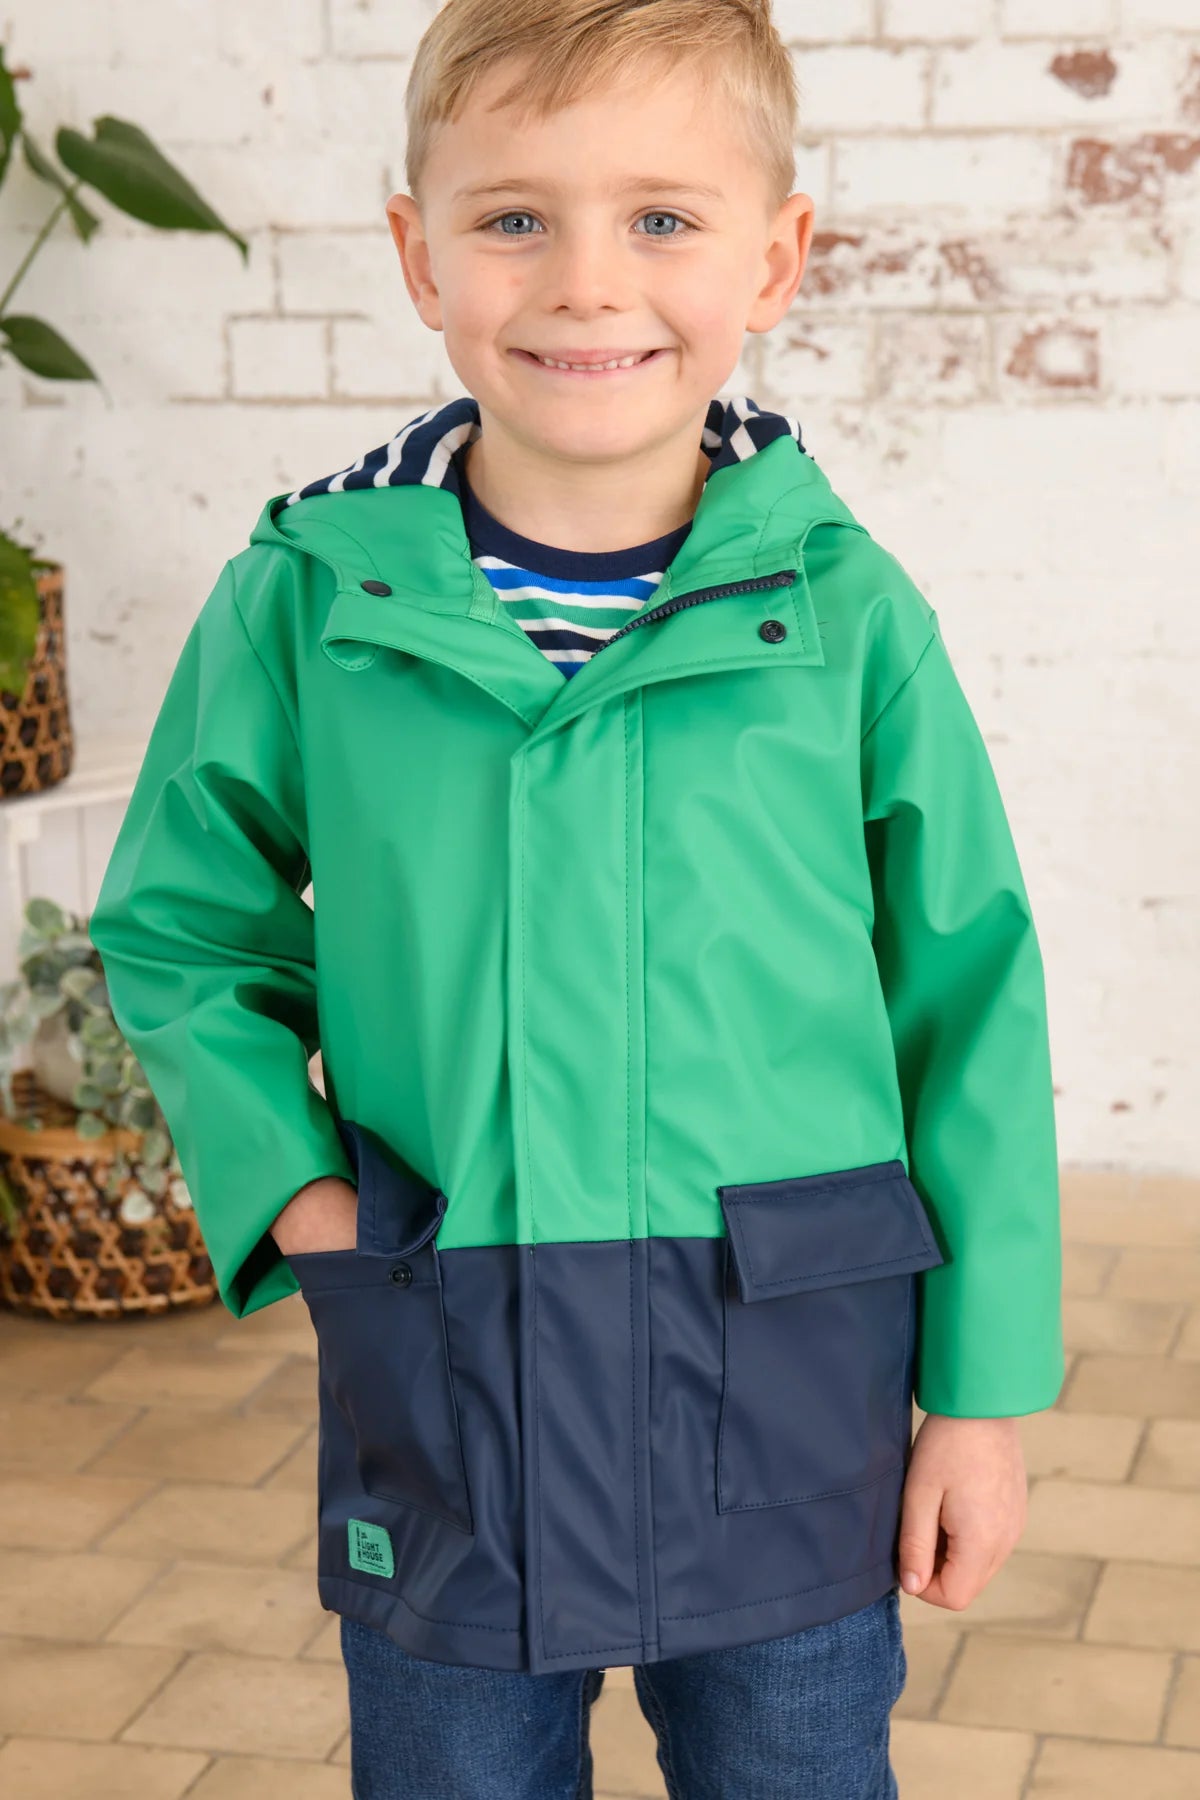 Lighthouse Kids 'Anchor' Waterproof Jacket -  Pea Green / Navy